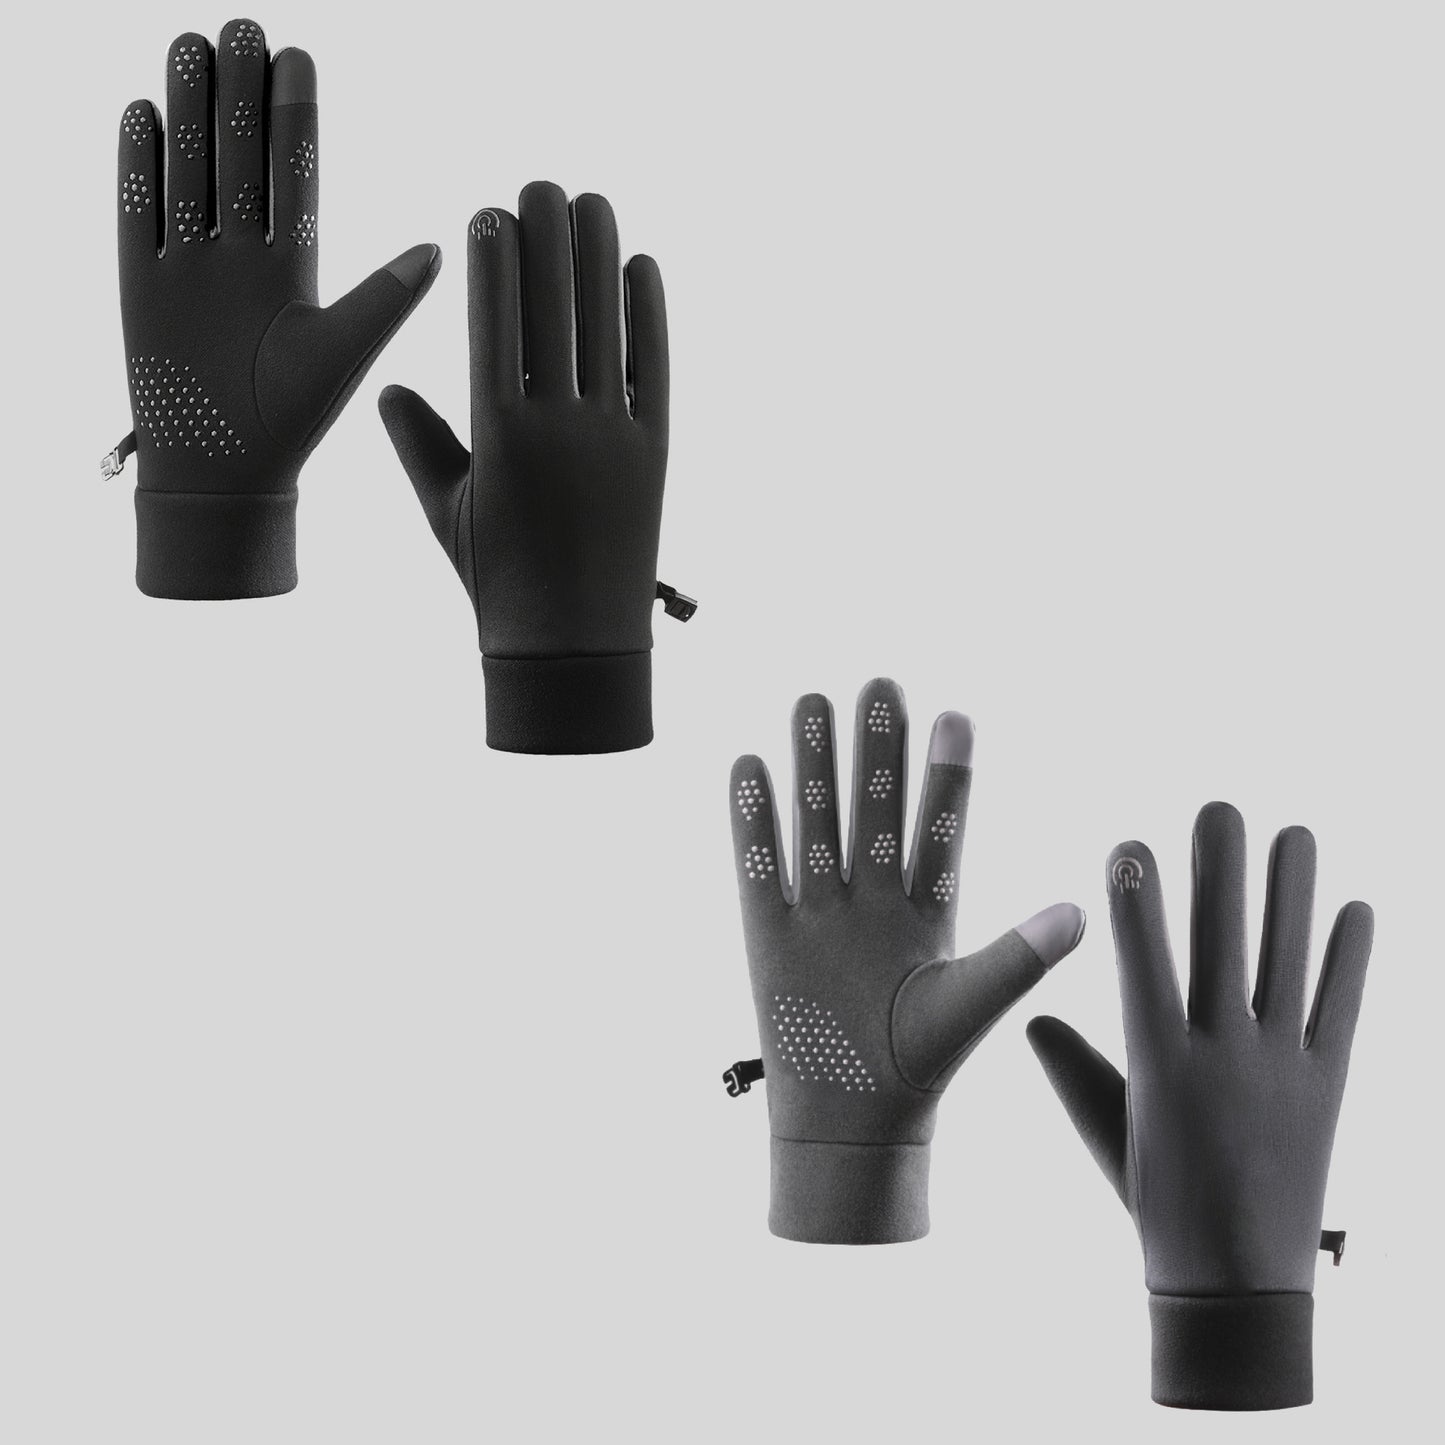 RICPIND Titanium Ionized Far Infrared Therapy ArthritisRelief Gloves